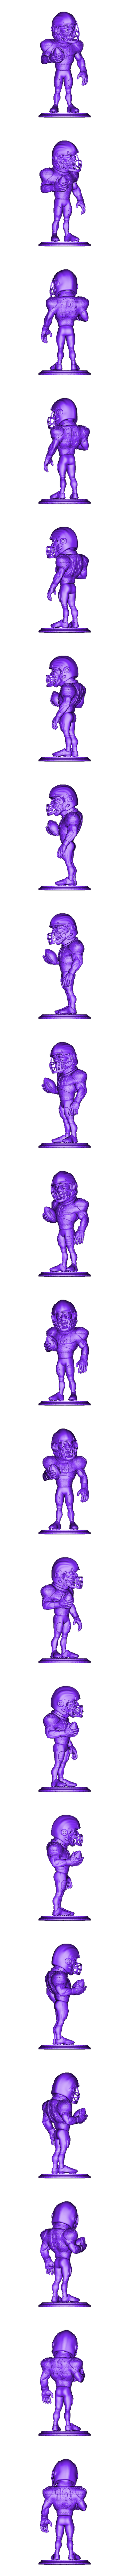 PM3D_Nickz_humanMaleAverage10.OBJ Download OBJ file football player • 3D print design, dimka134russ